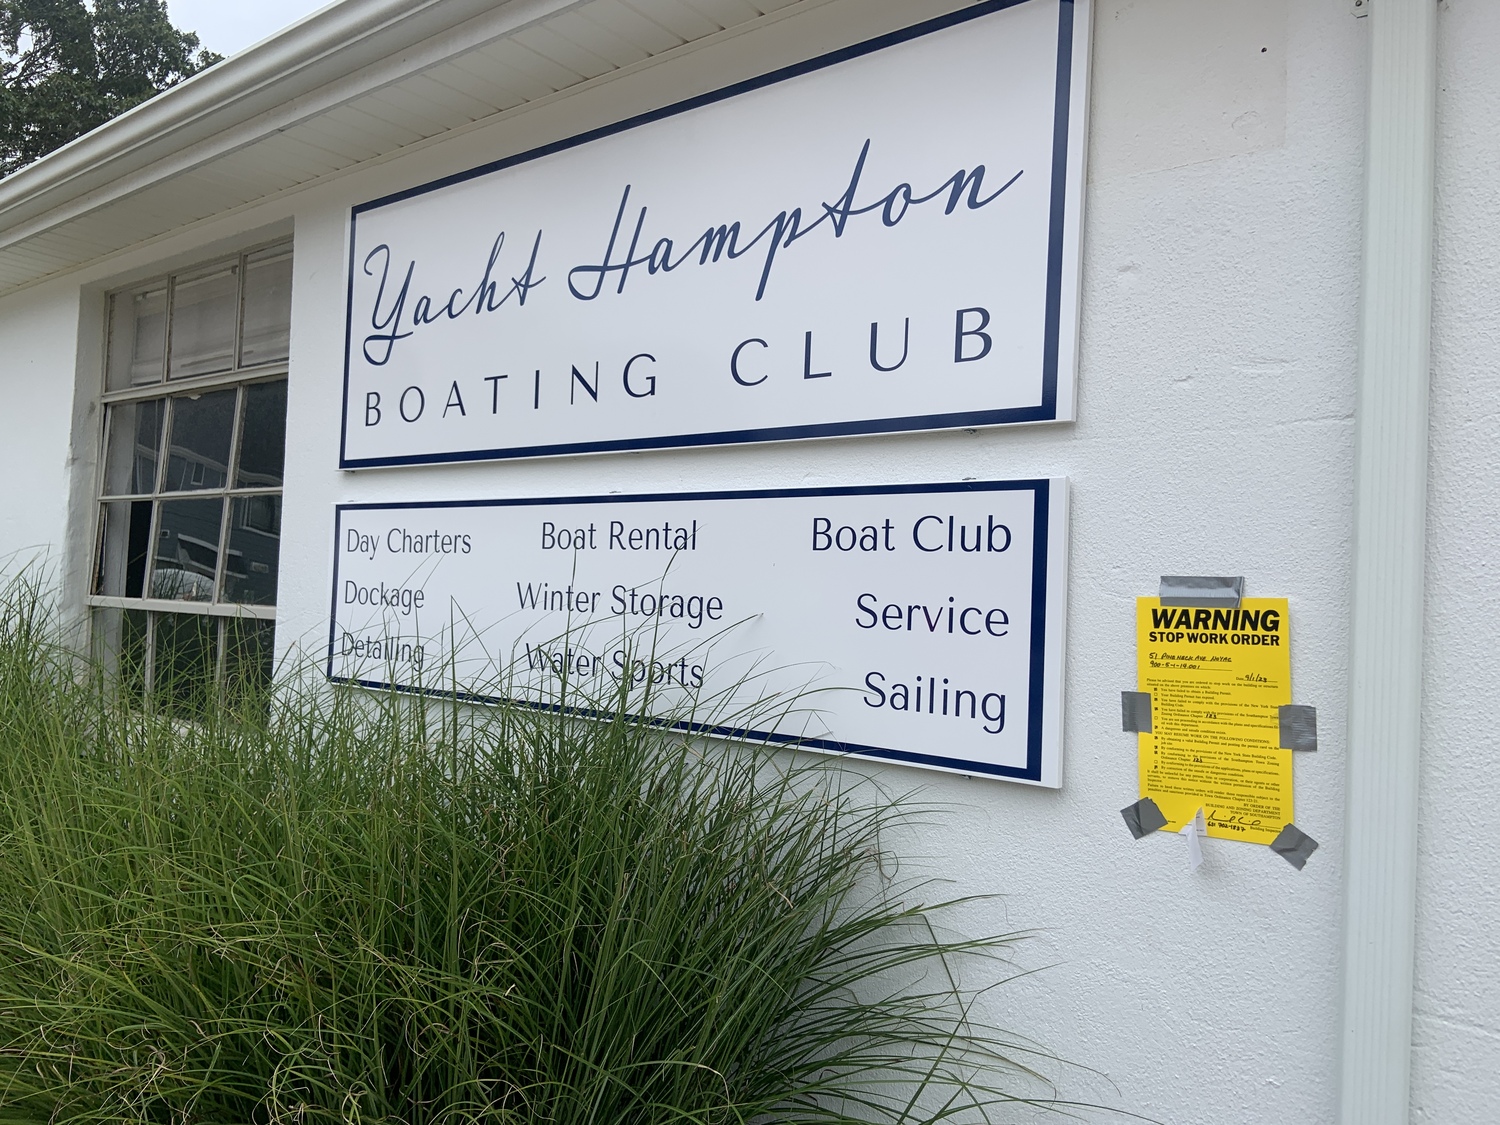 Southampton Town has issued a stop-work order at the Yacht Hampton marina in Noyac. STEPHEN J. KOTZ